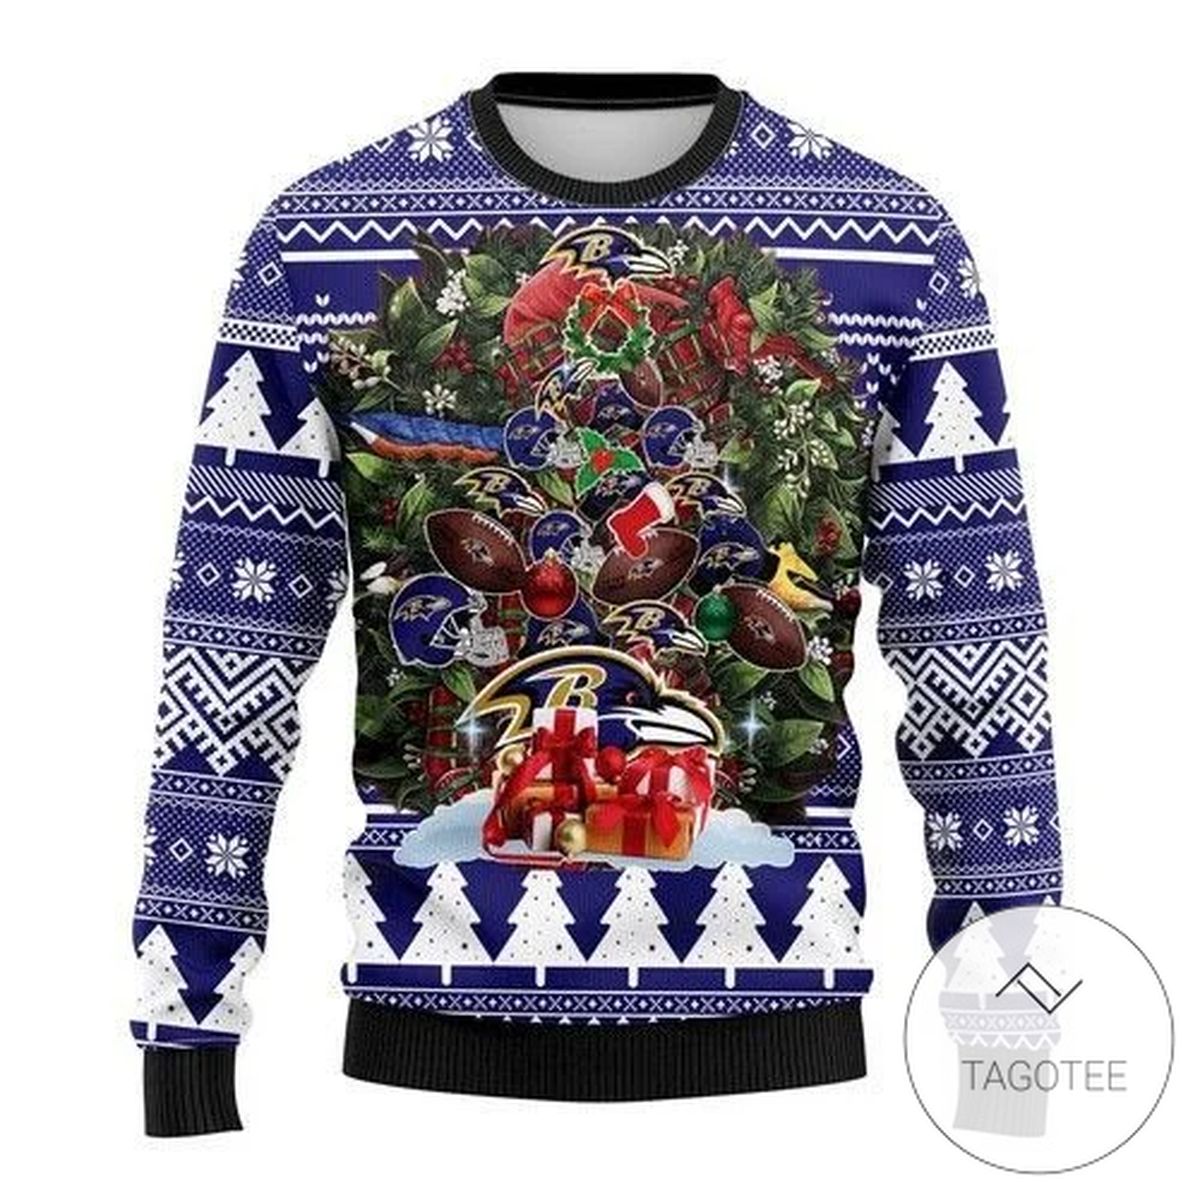 Nfl Baltimore Ravens Tree Christmas Sweatshirt Knitted Ugly Christmas Sweater